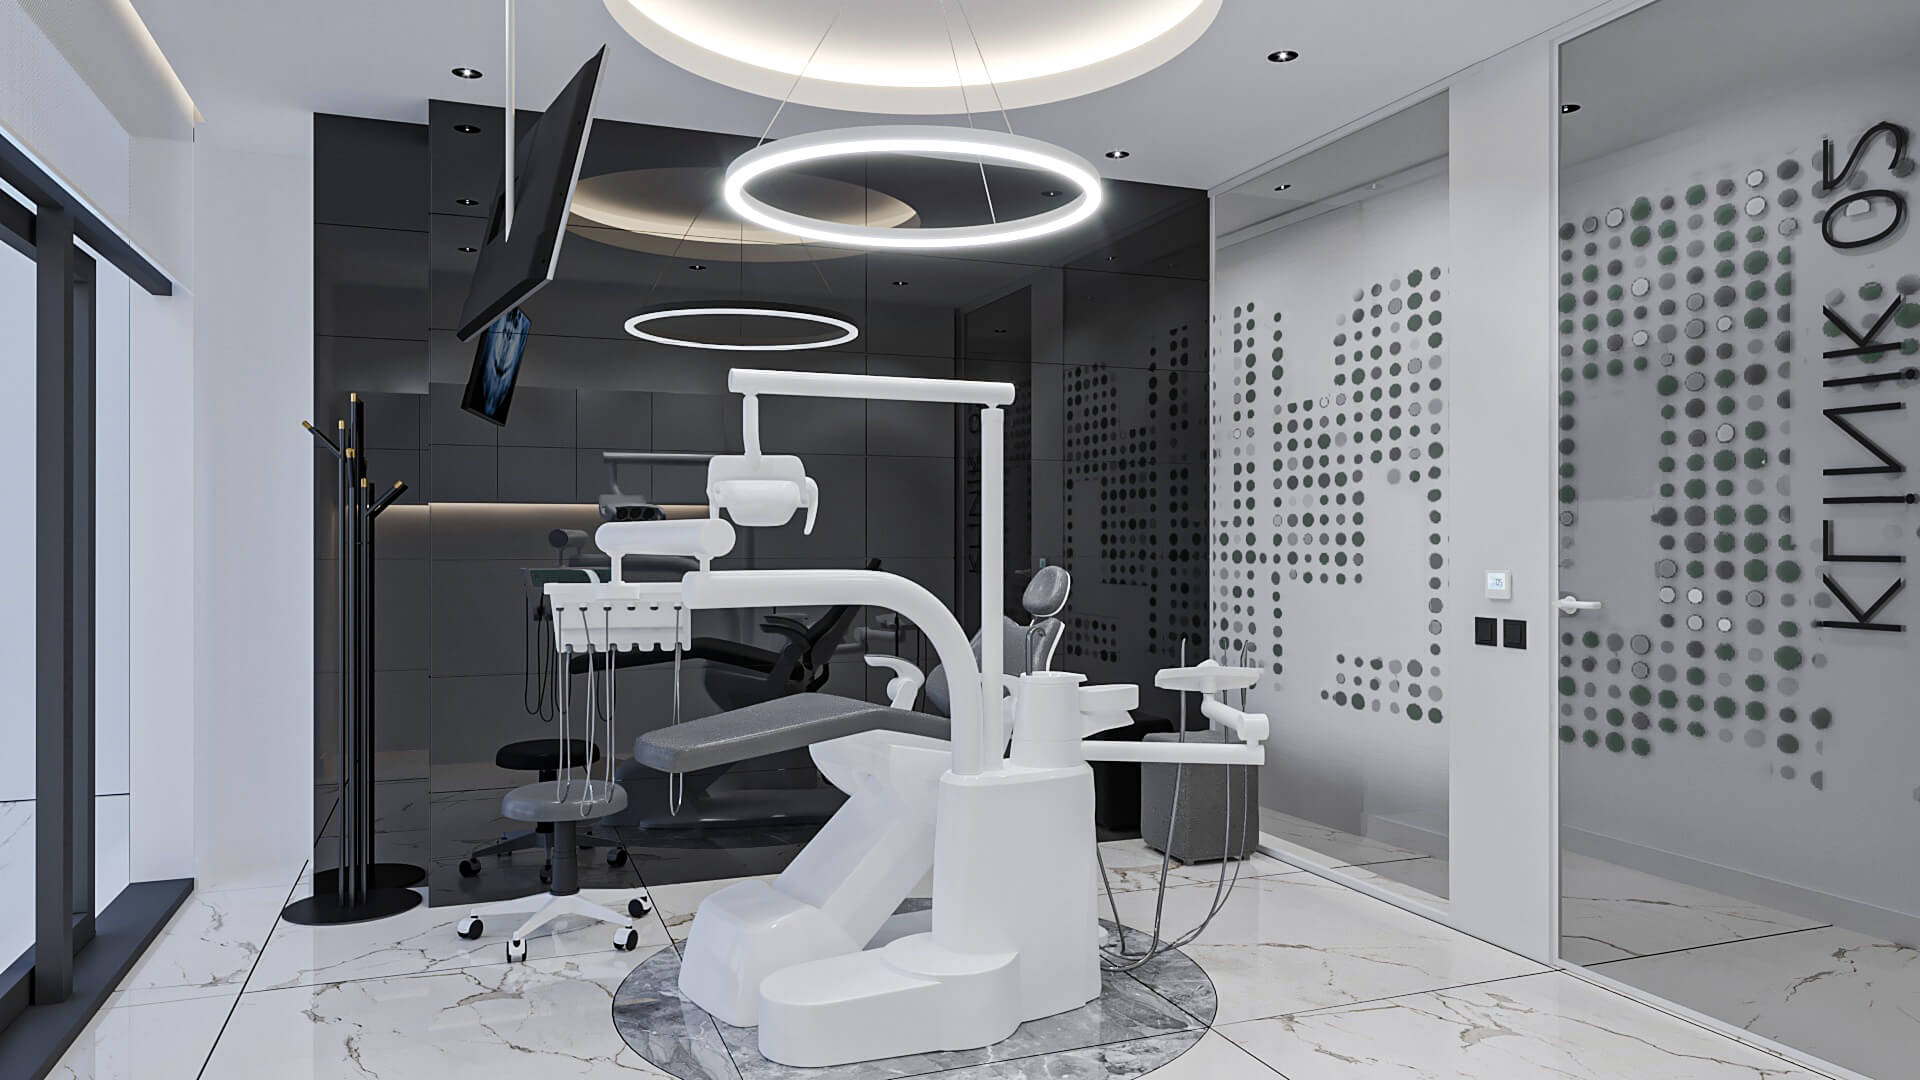 Dental clinic design